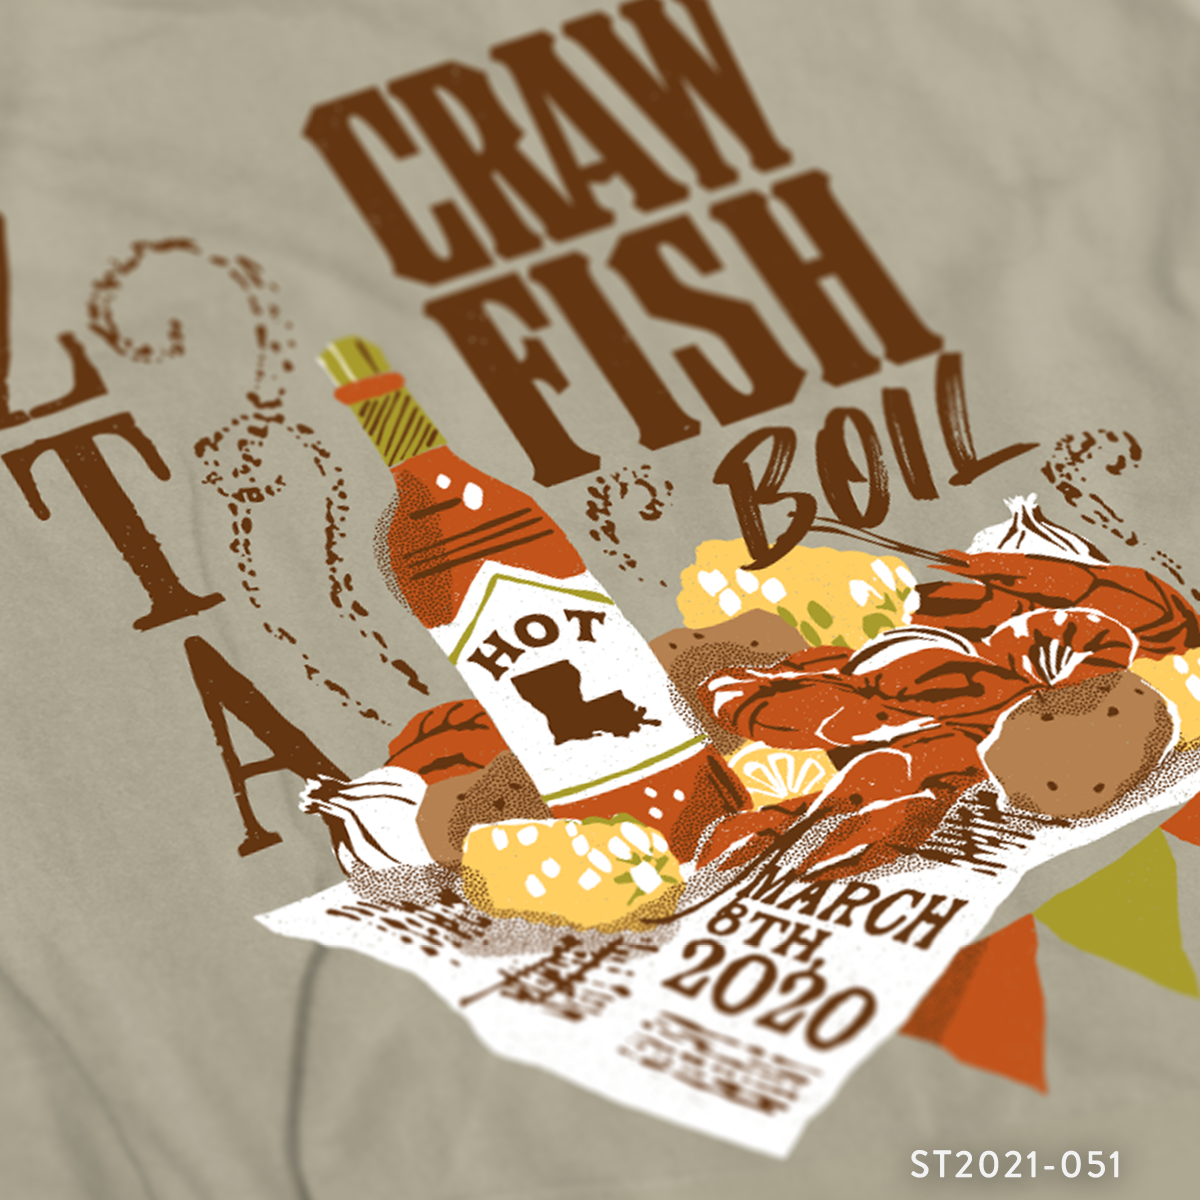 ST2021 051 Crawfish Boil